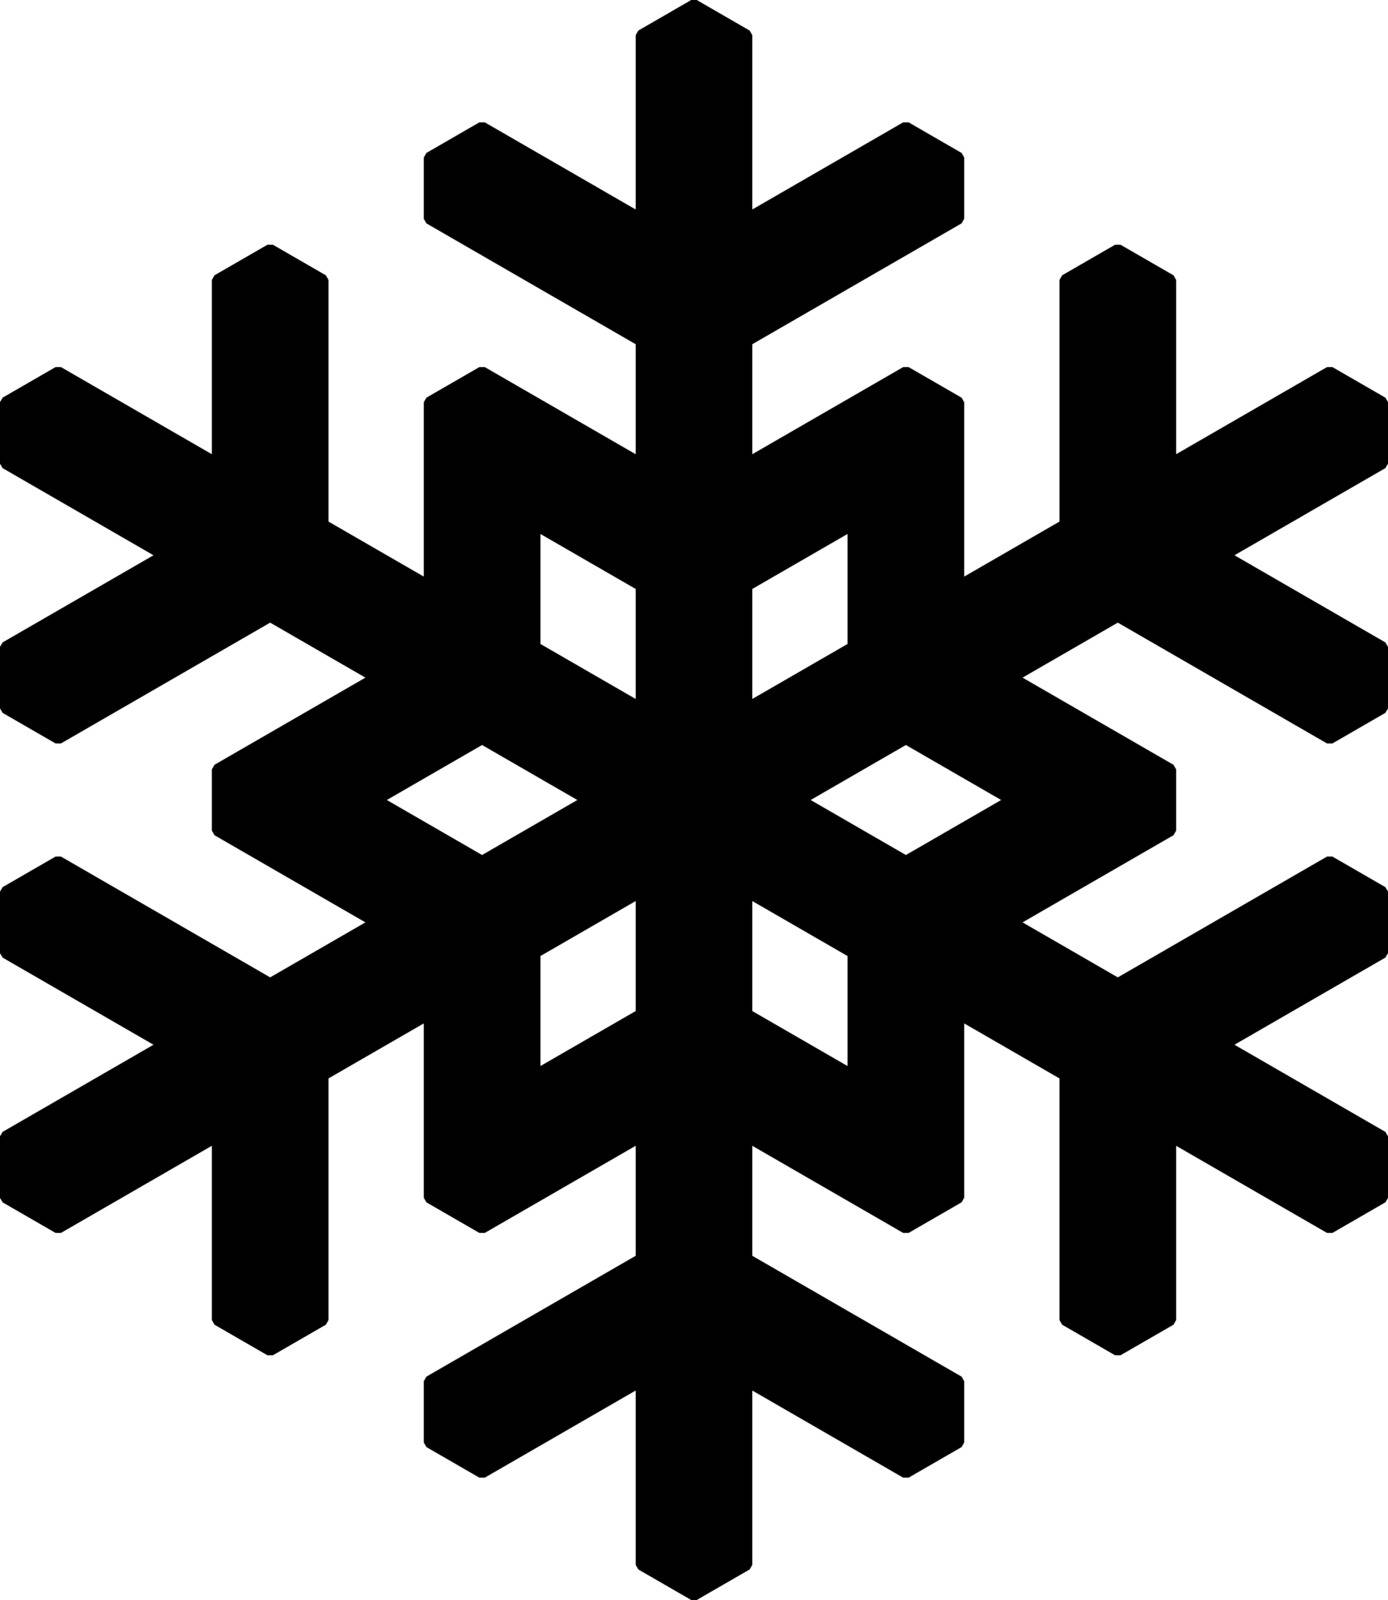 Snowflake icon. Christmas and winter theme. Simple flat black illustration on white background.